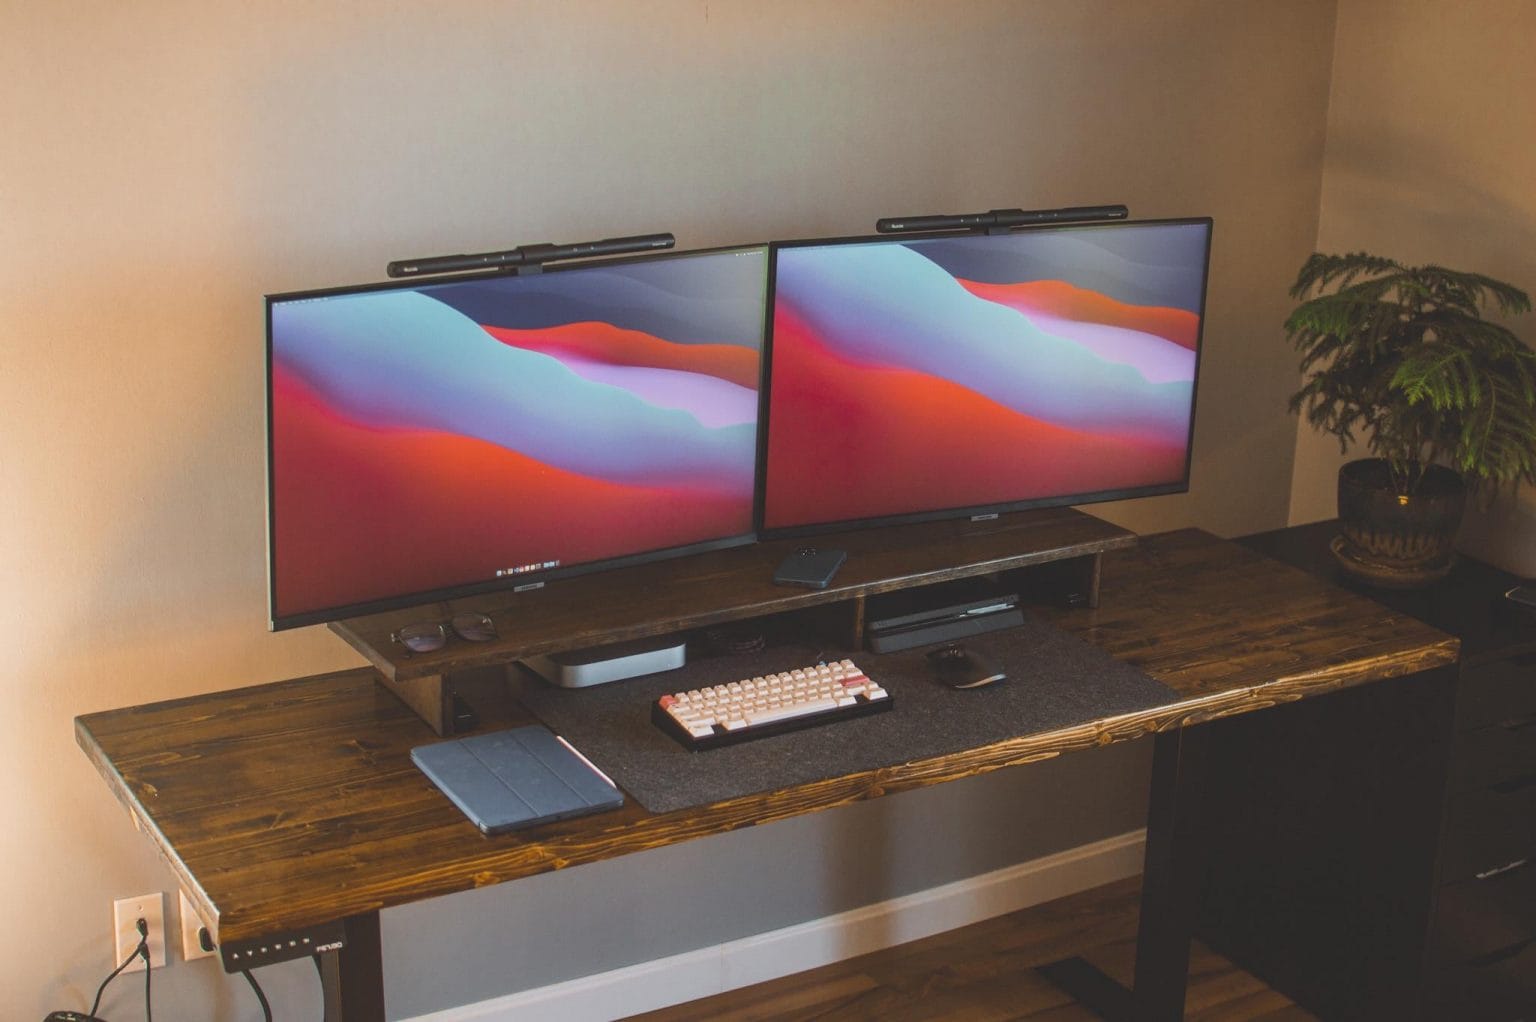 Two smart monitors with matching light bars easily run off a Mac mini M1.